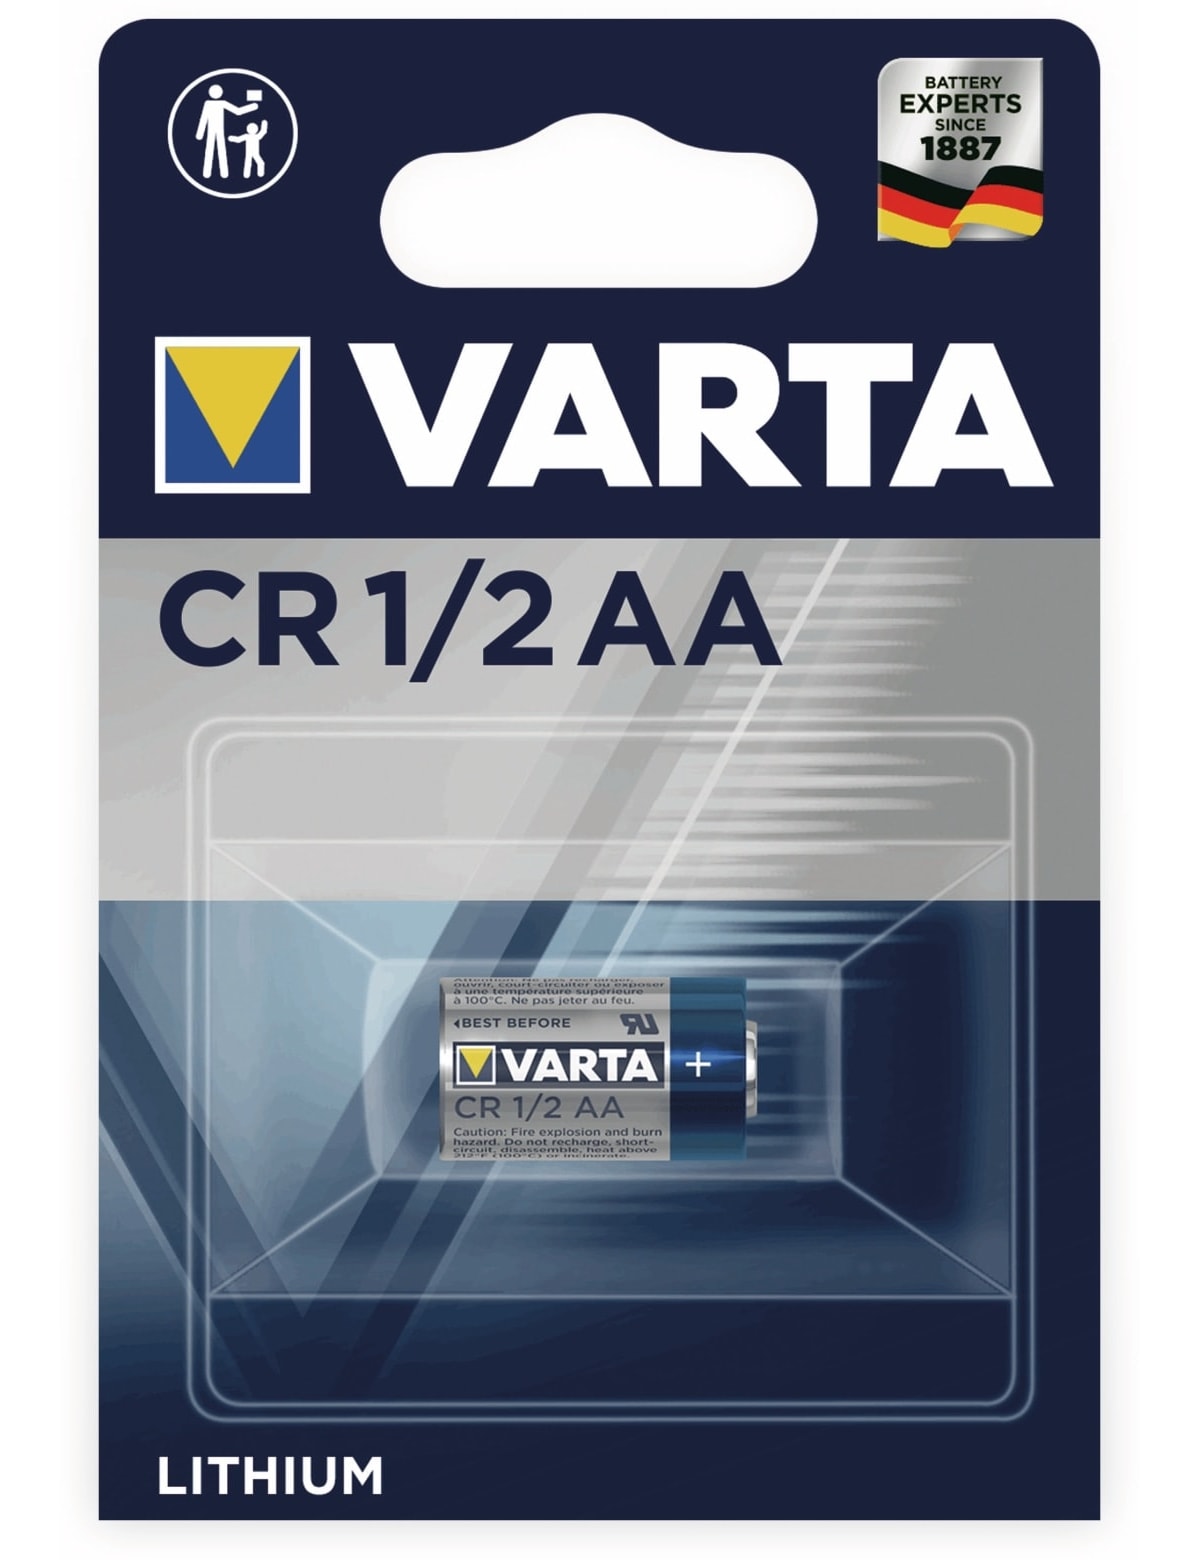 VARTA Lithium-Batterie CR1/2AA, 3 V-, 950 mAh